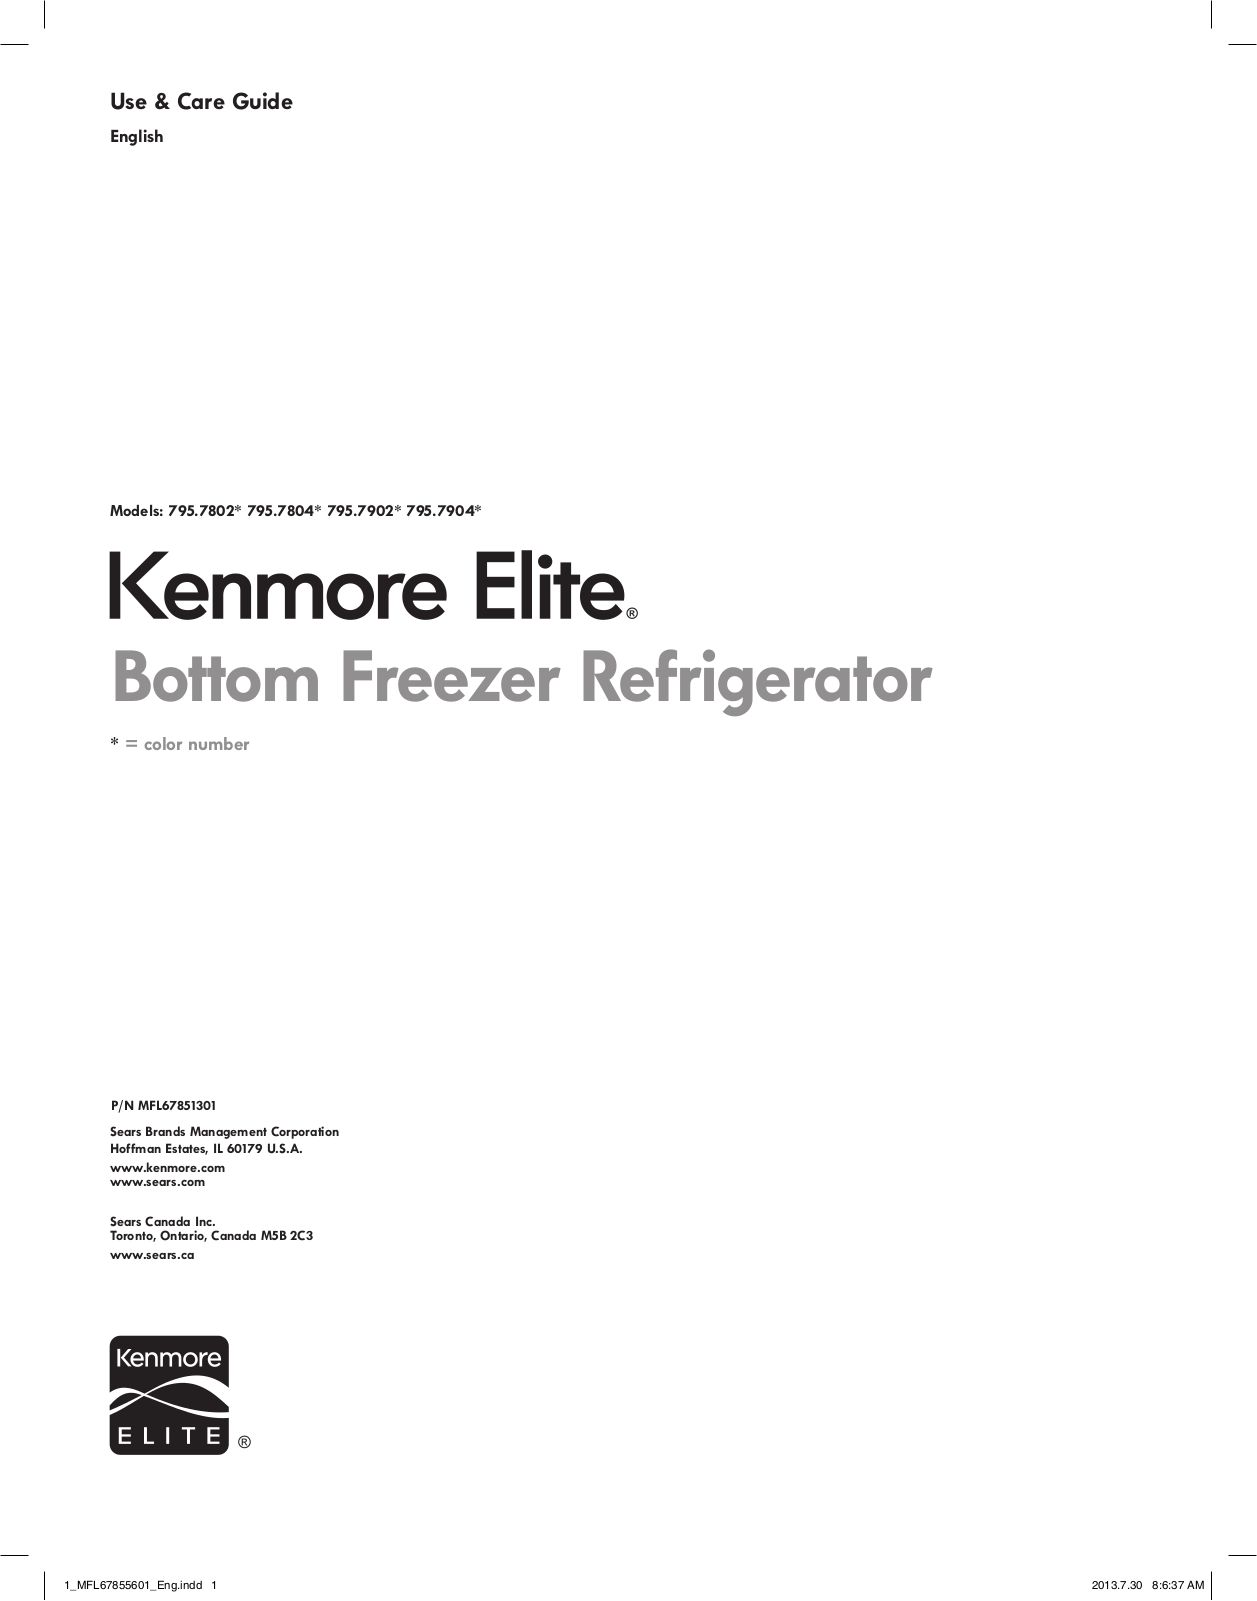 Kenmore Elite 24 cu. ft. Bottom-Freezer Refrigerator, Elite 22 cu. ft. Bottom-Freezer Refrigerator Owner's Manual